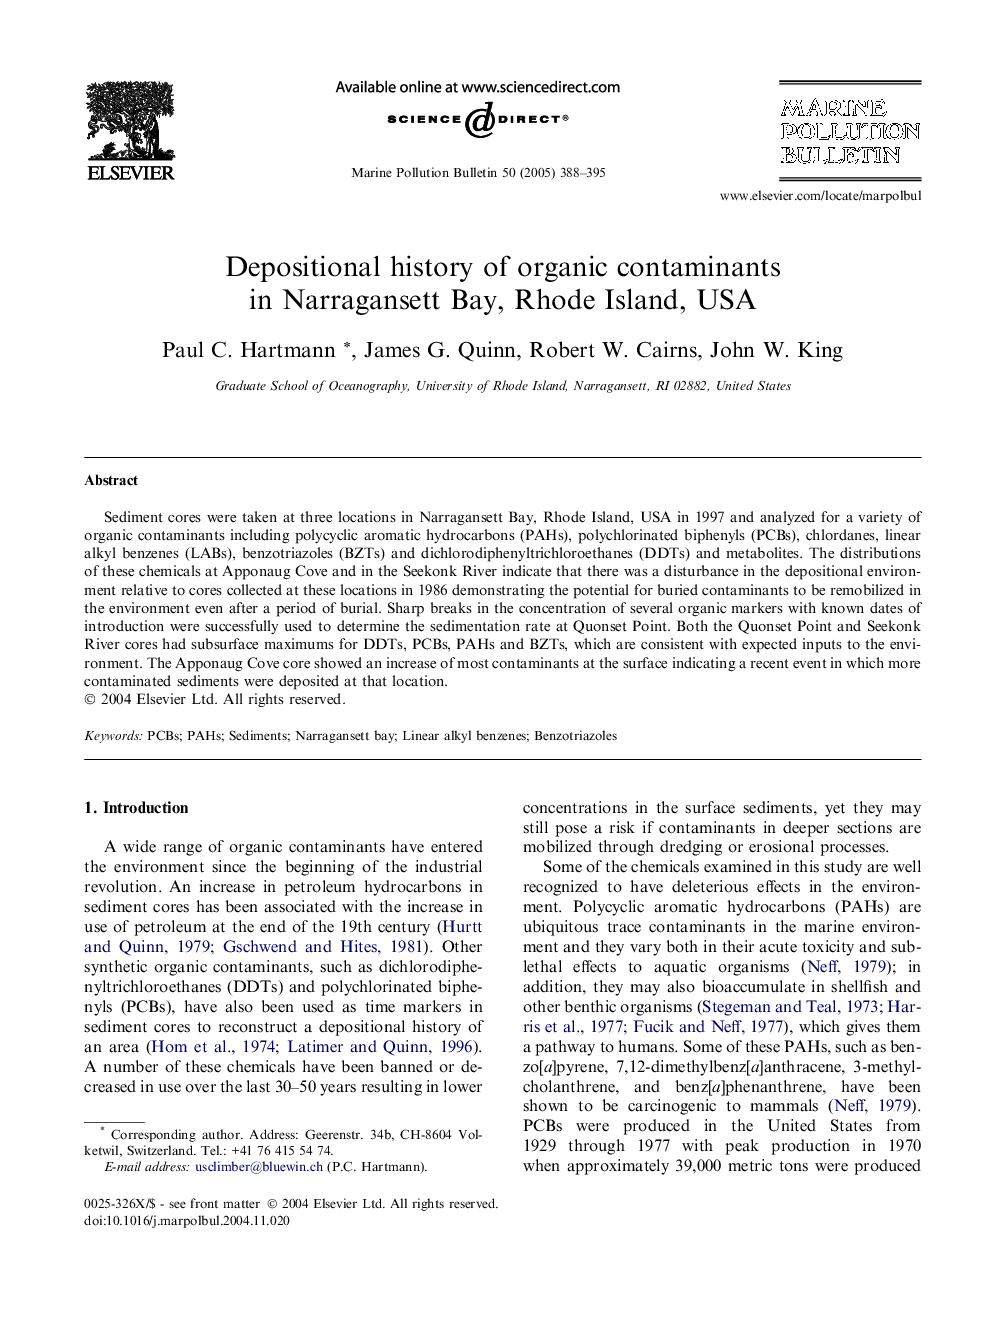 Depositional history of organic contaminants in Narragansett Bay, Rhode Island, USA